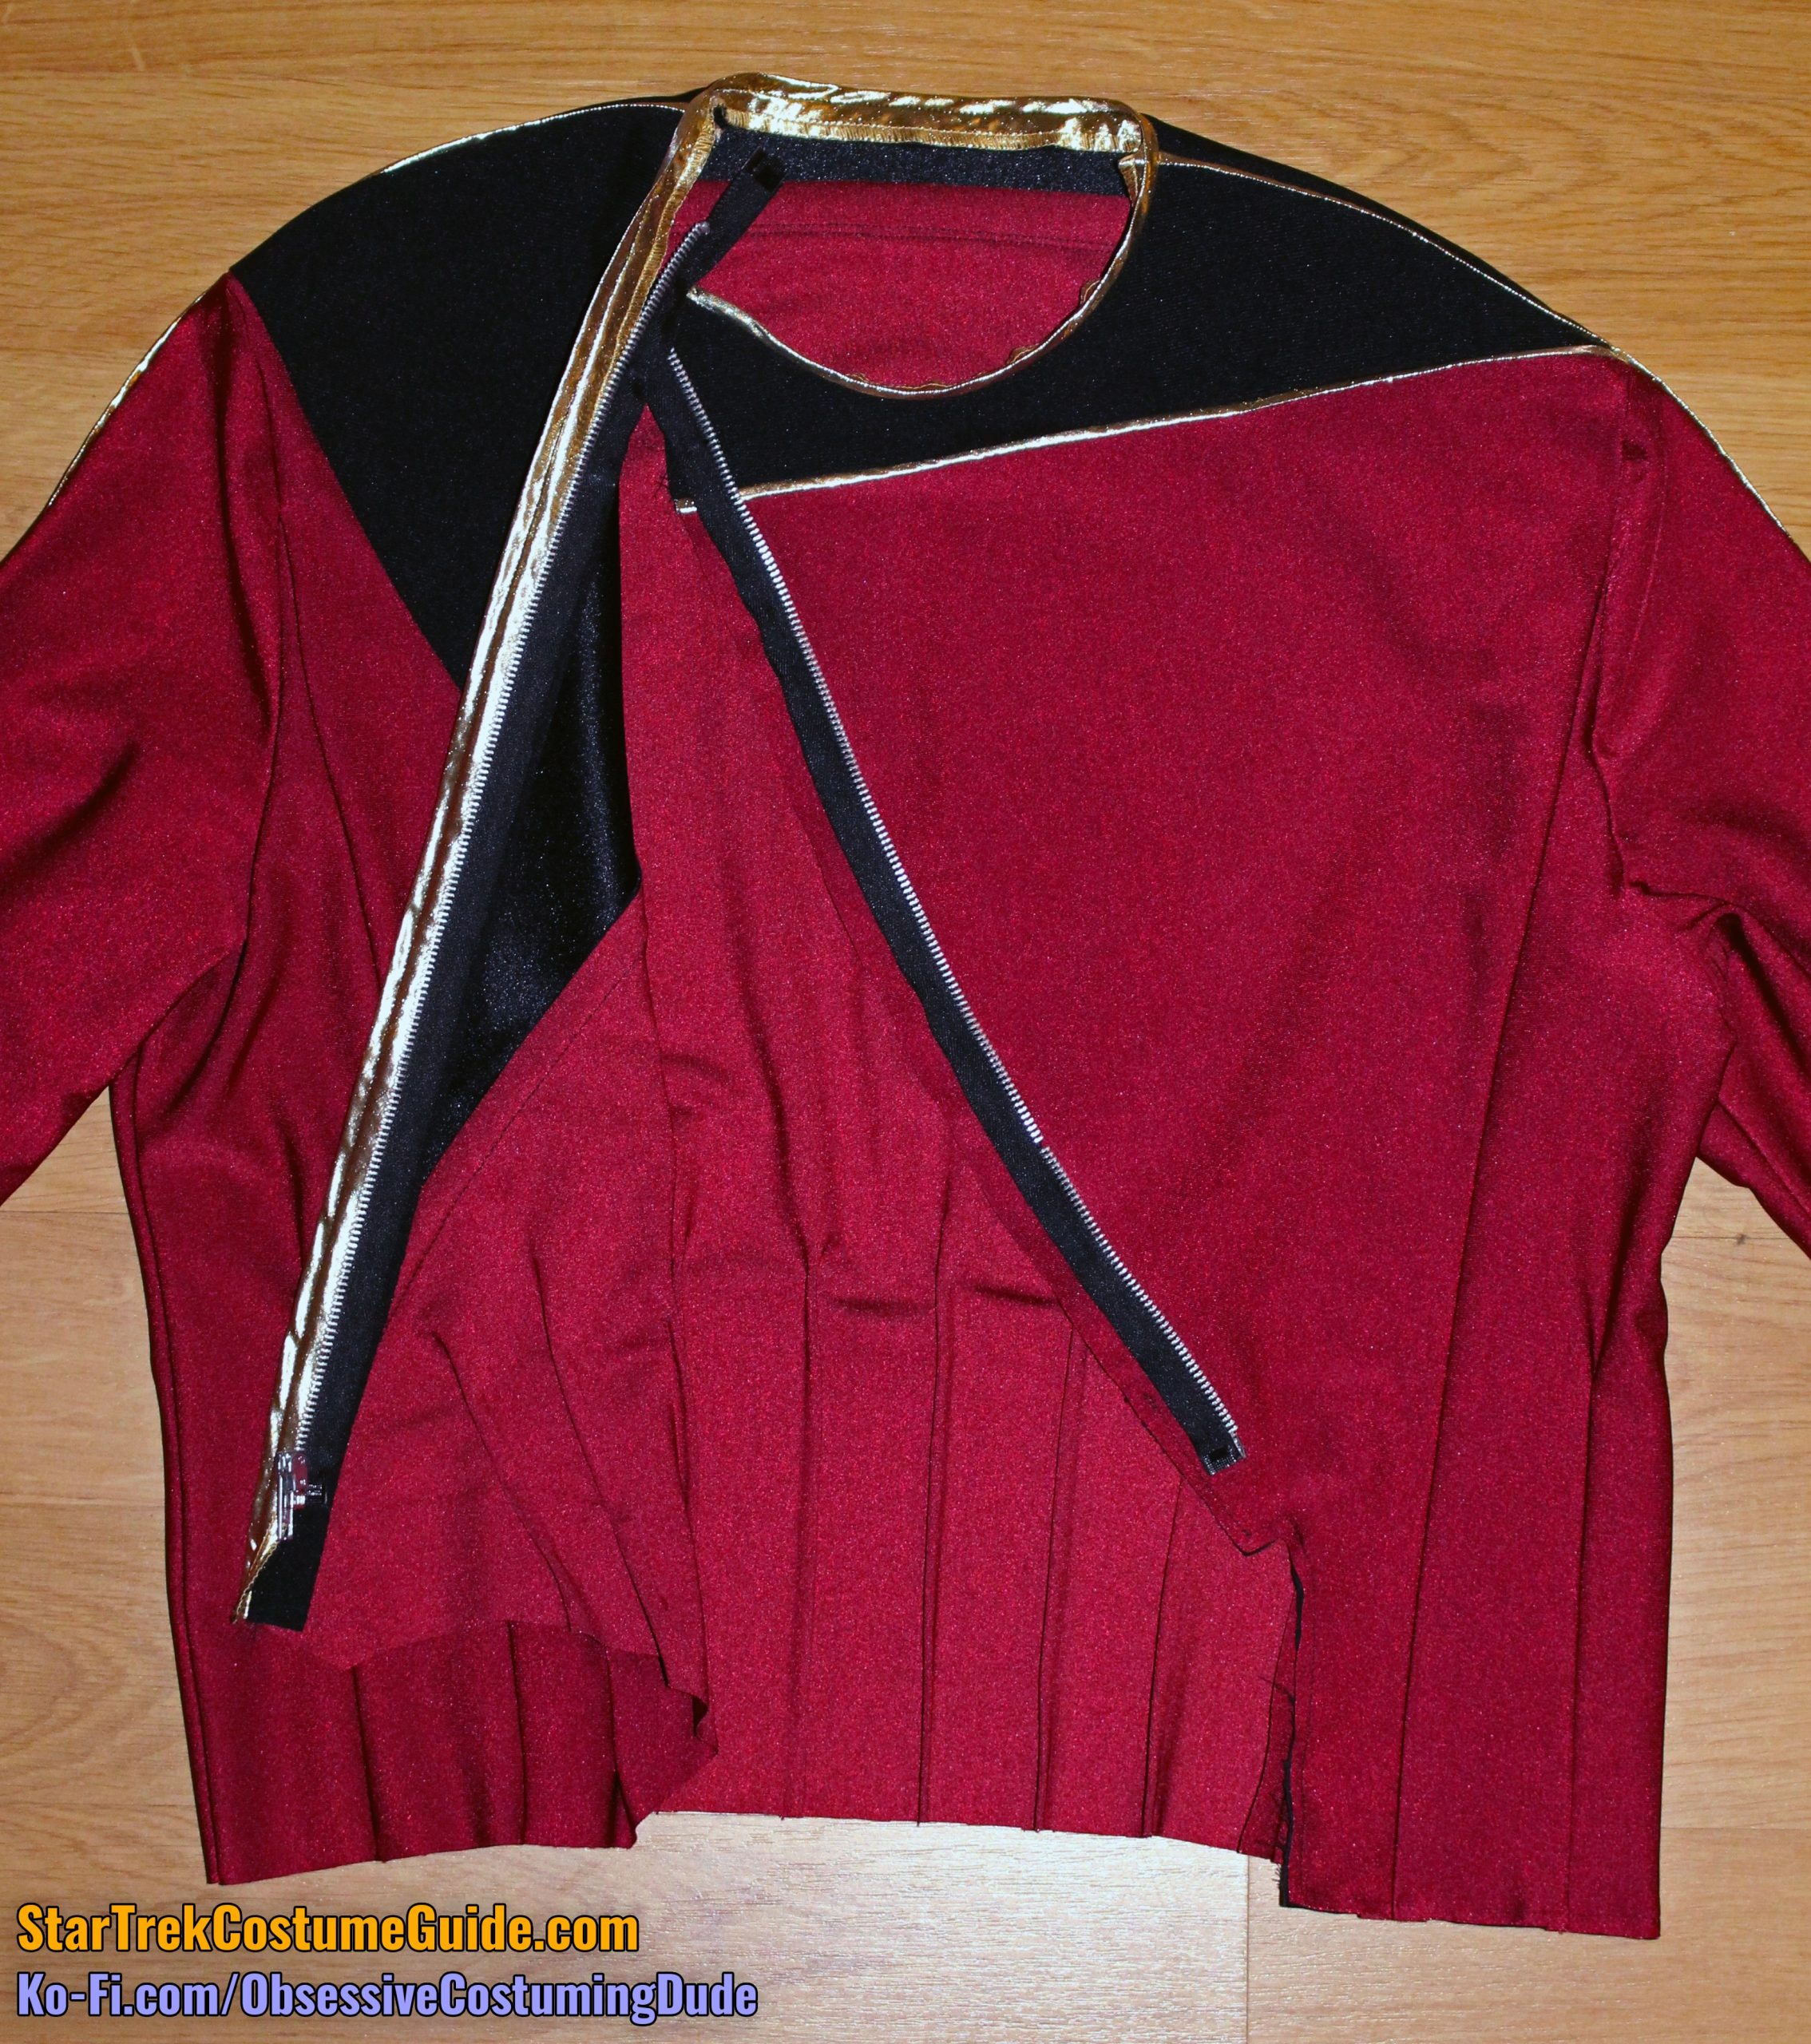 TNG admiral uniform (season 1) sewing tutorial - Star Trek Costume Guide